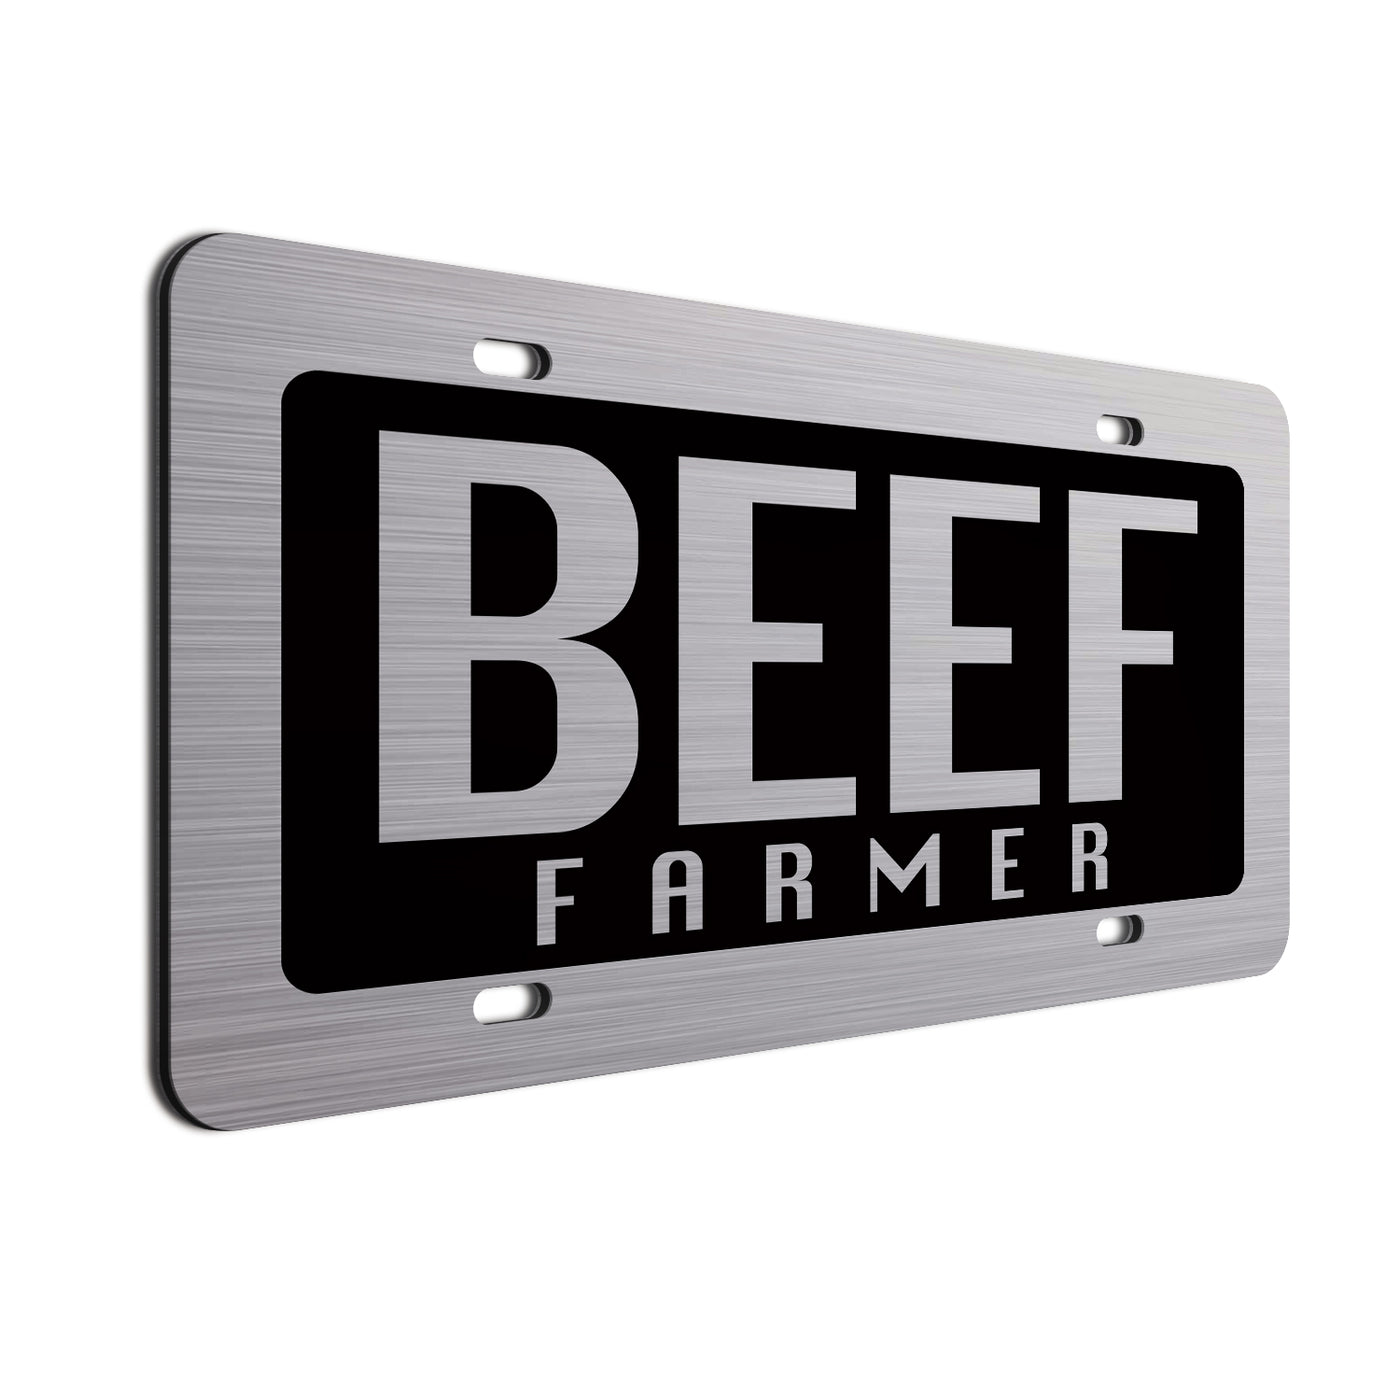  Beef Farmer Car License Plate Black